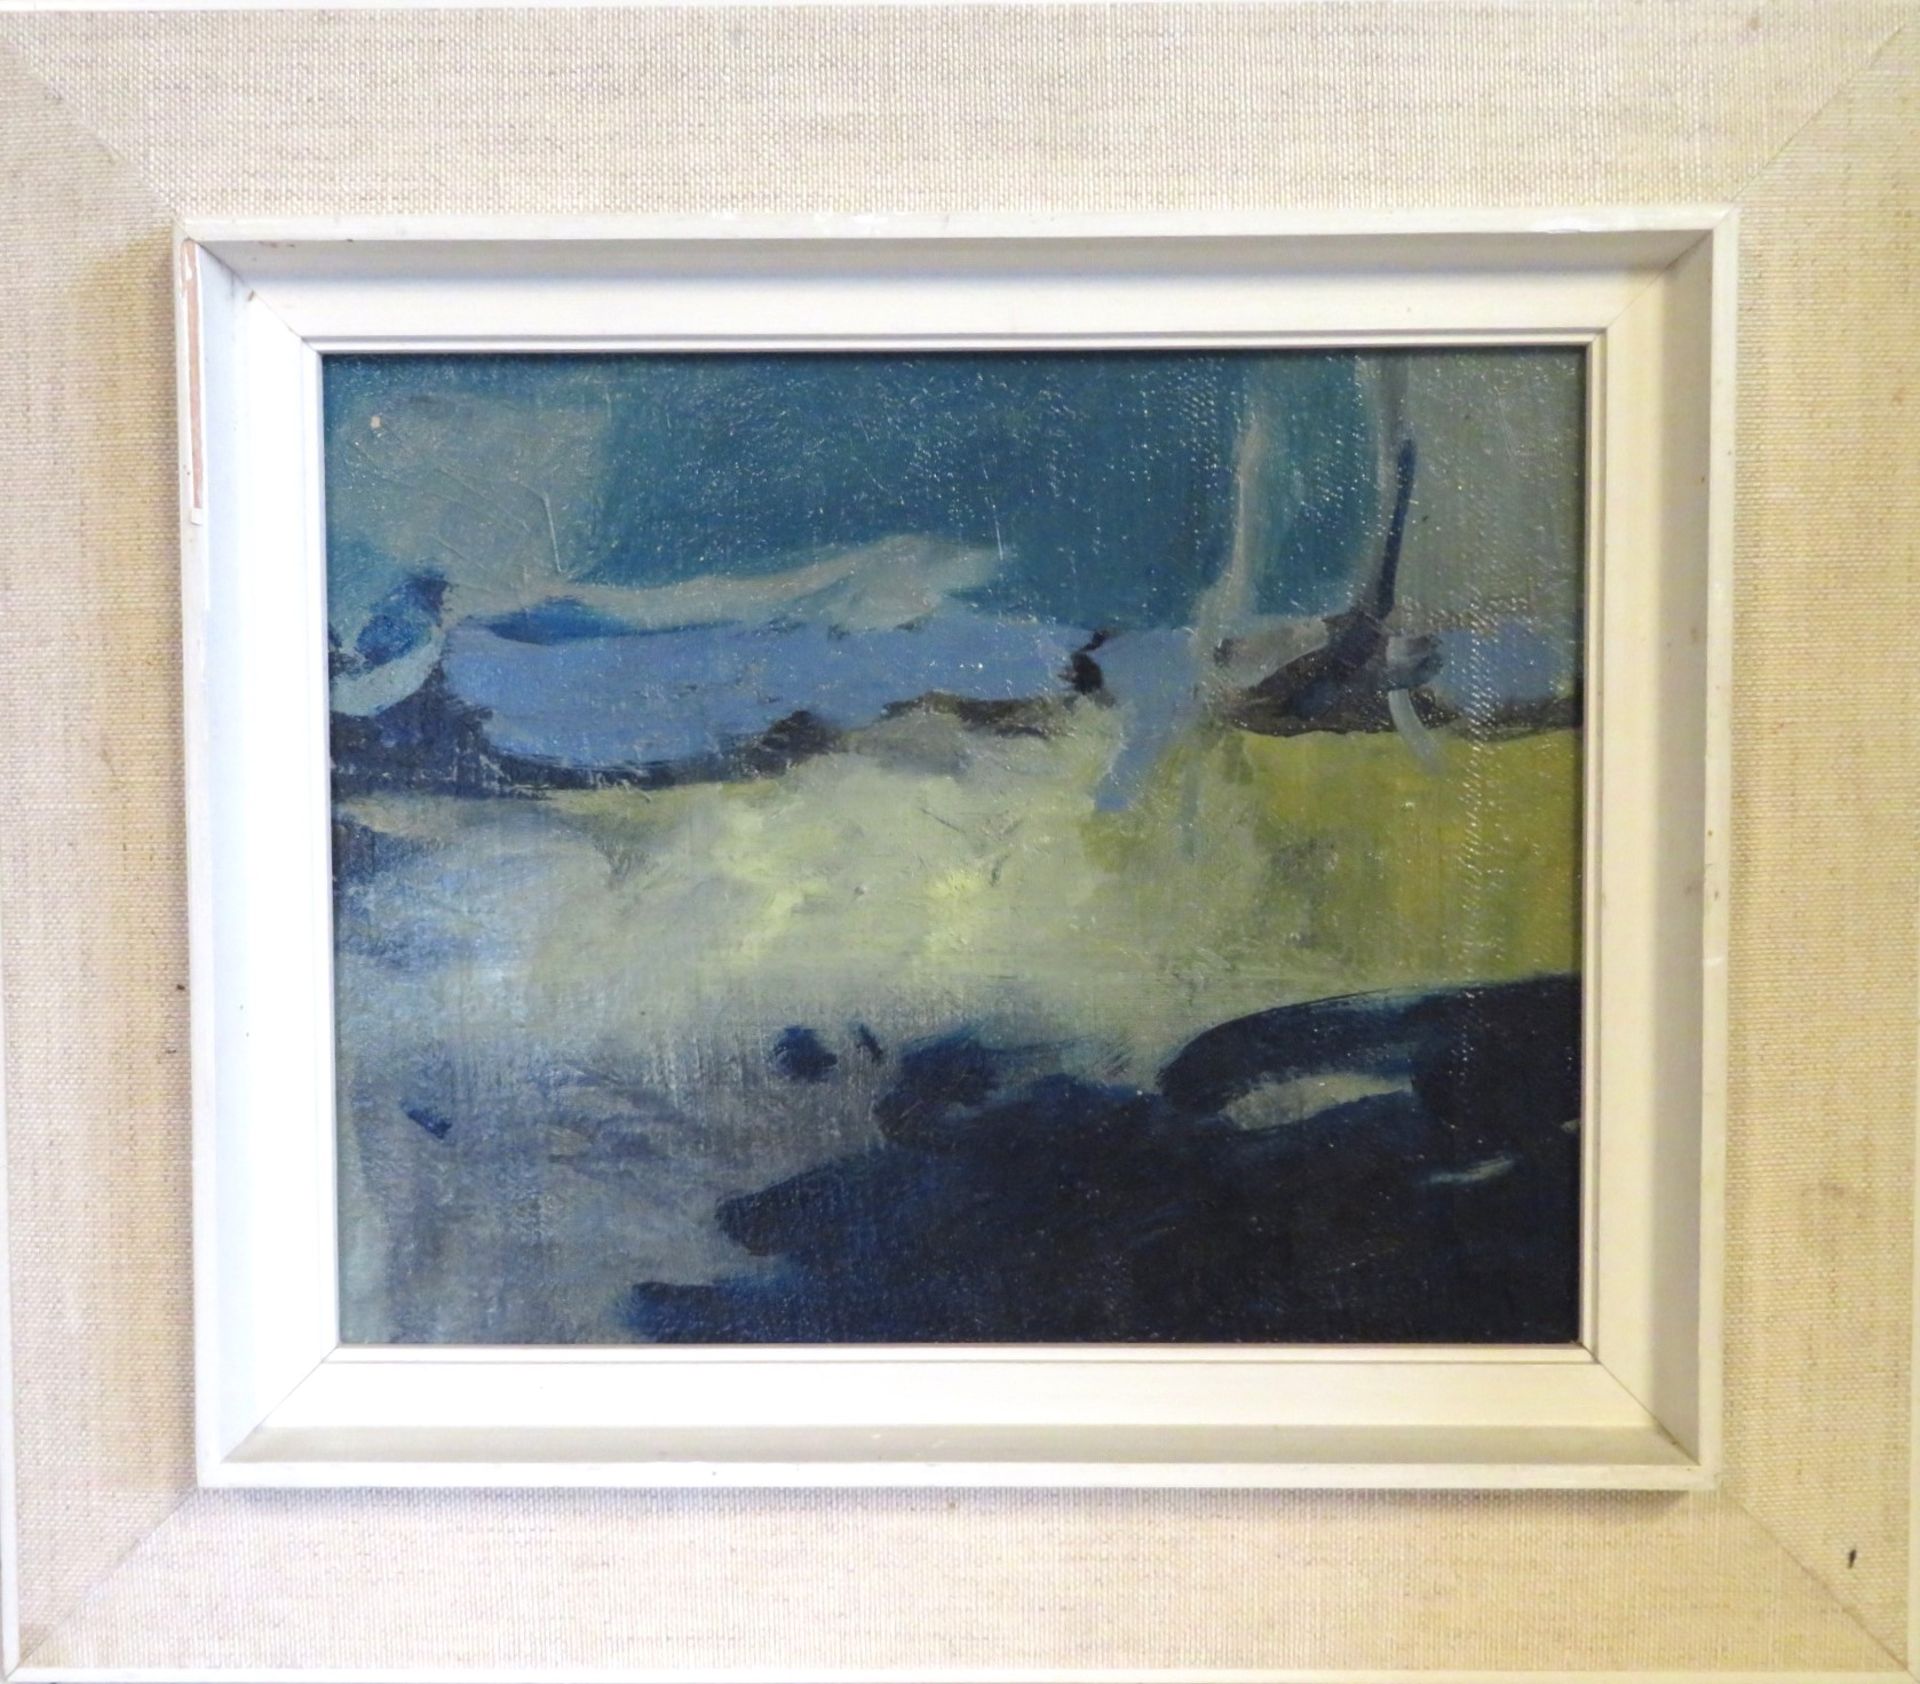 Unbekannt, 1. Hälfte 20. Jahrhundert, "Moderne Komposition in Blautönen", Öl/Leinwand, 31 x 25 cm, - Image 2 of 2